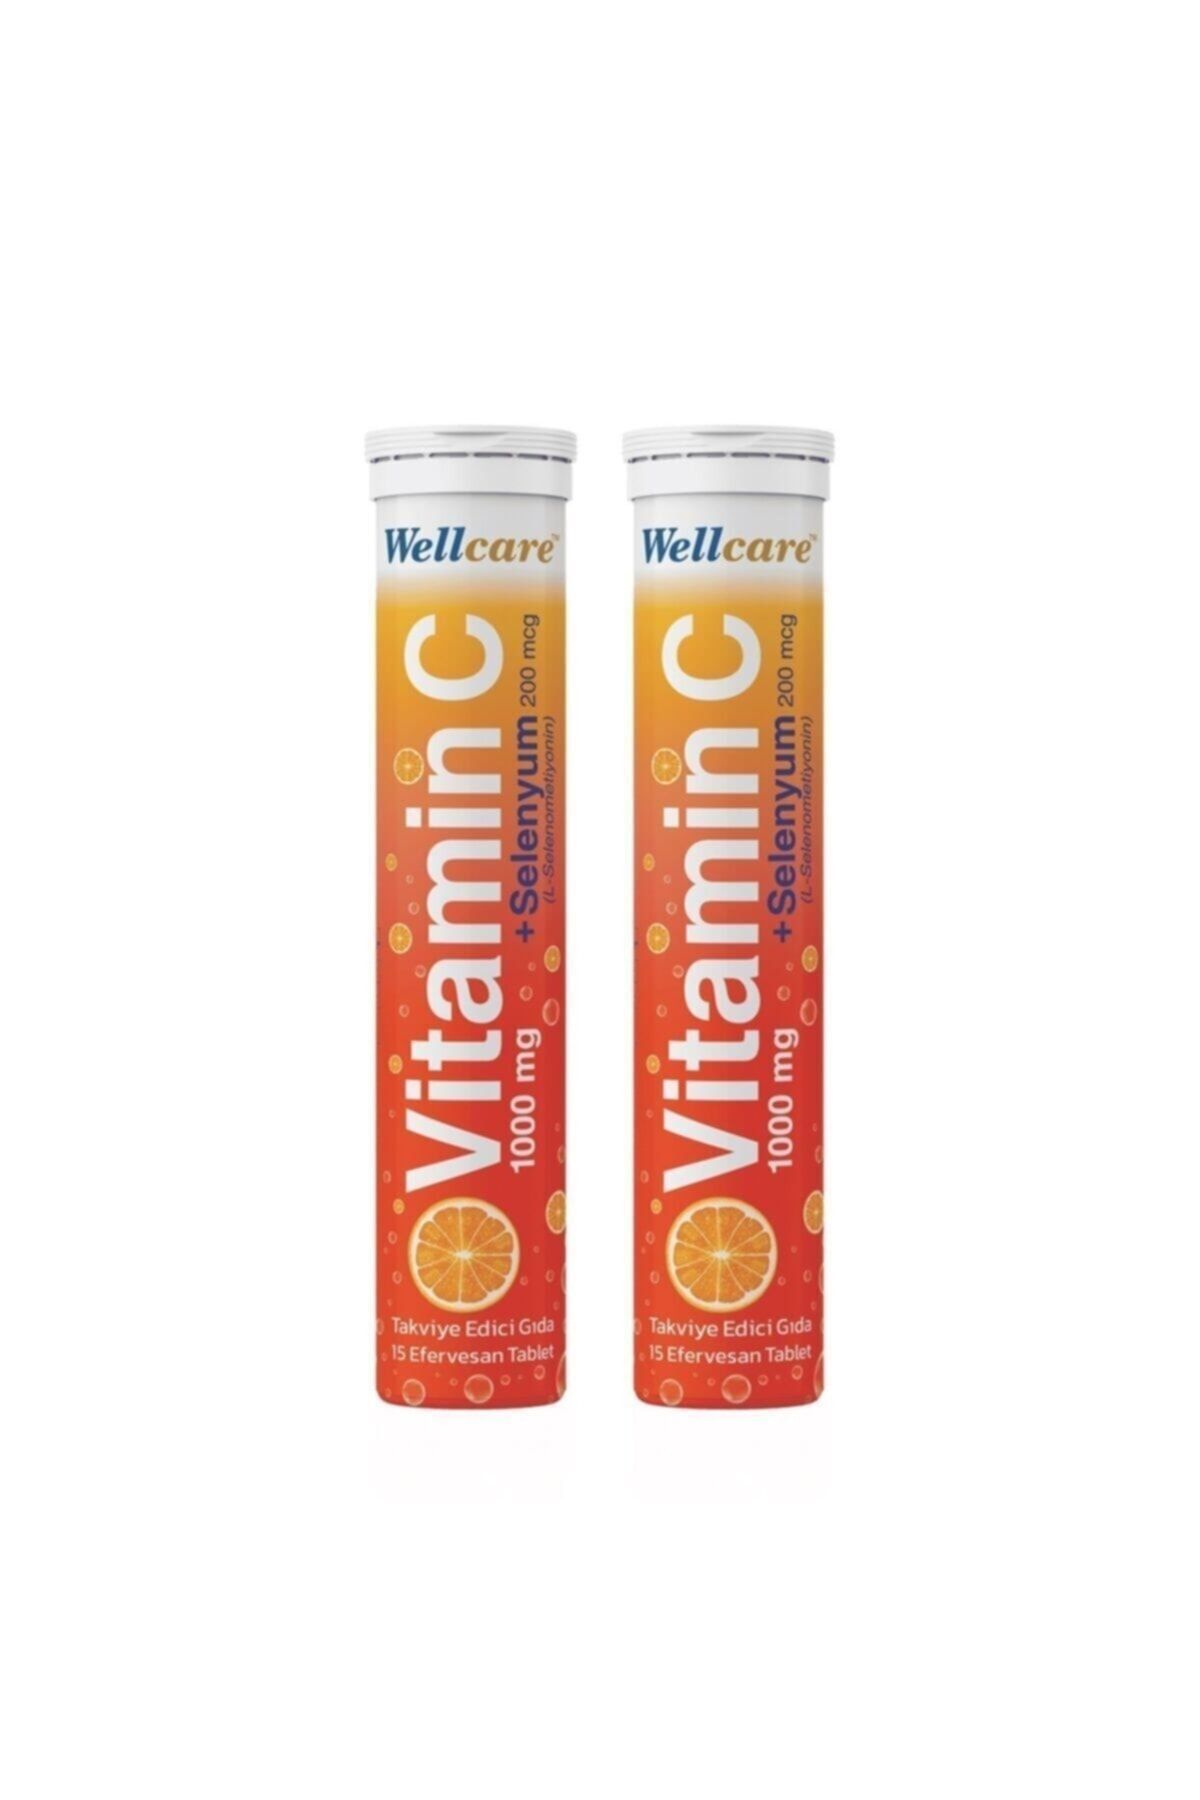 Wellcare Vitamin C + Selenyum15 Efervesan Tablet - 2 Adet